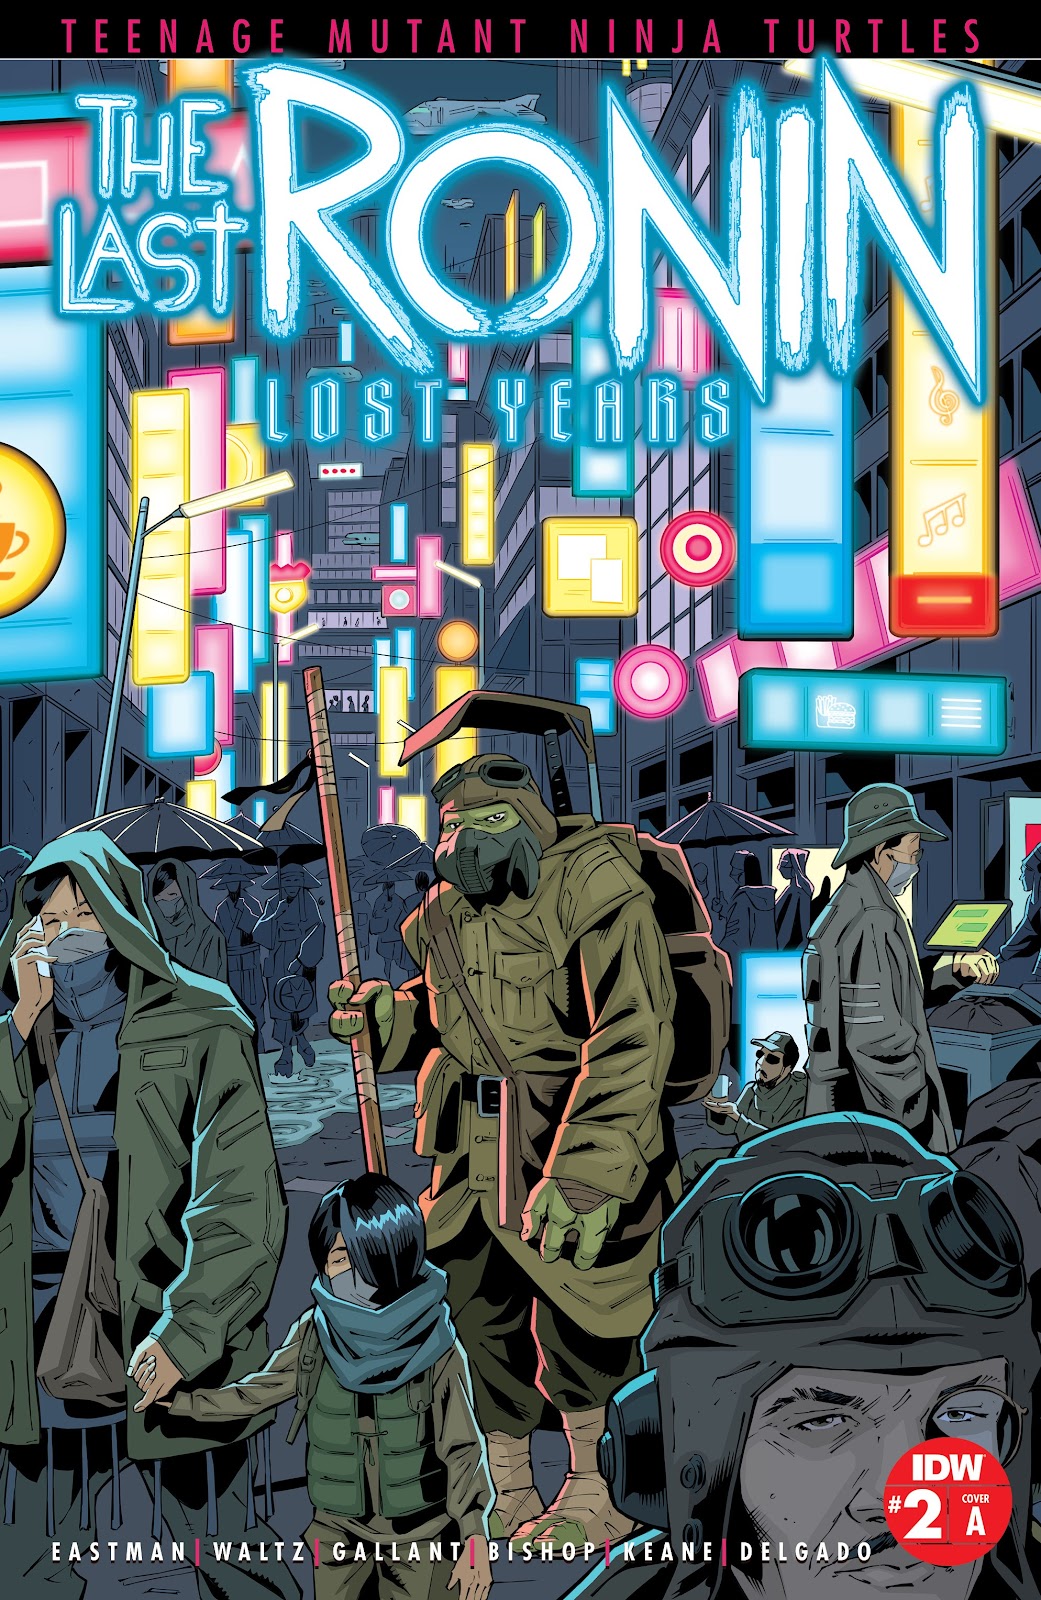 Teenage Mutant Ninja Turtles: The Last Ronin - The Lost Years issue 2 - Page 1